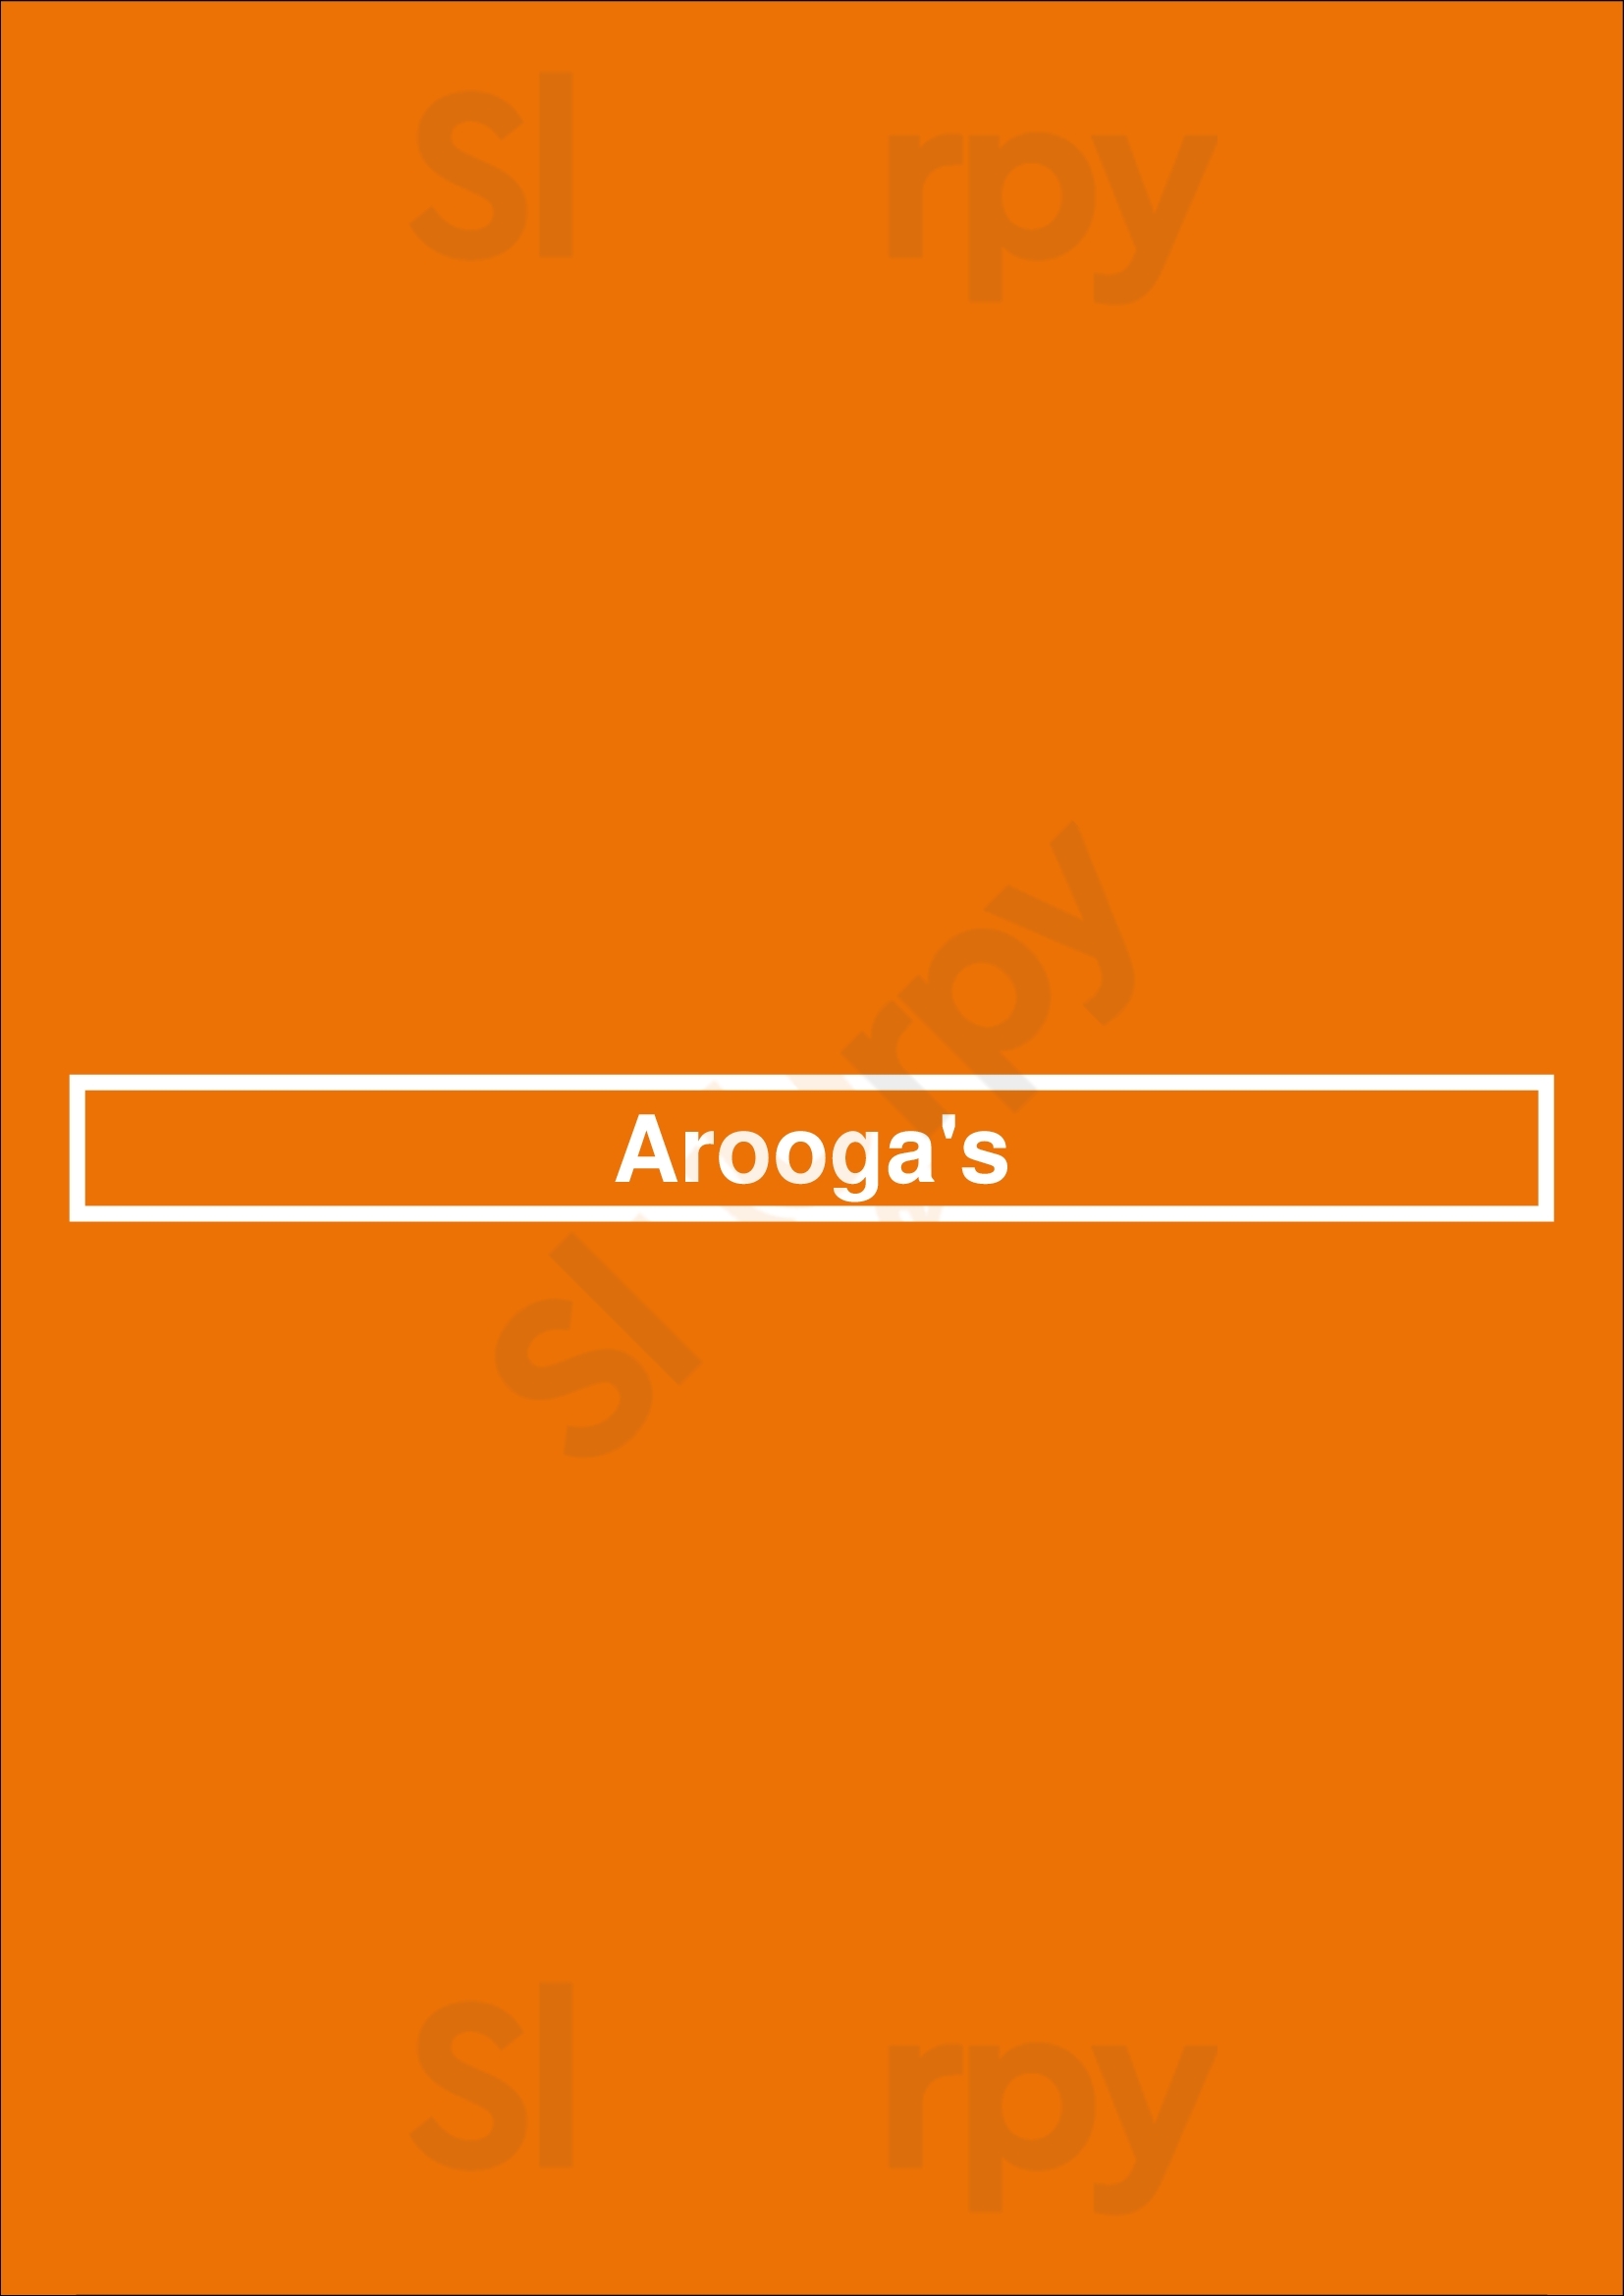 Arooga's Harrisburg Menu - 1